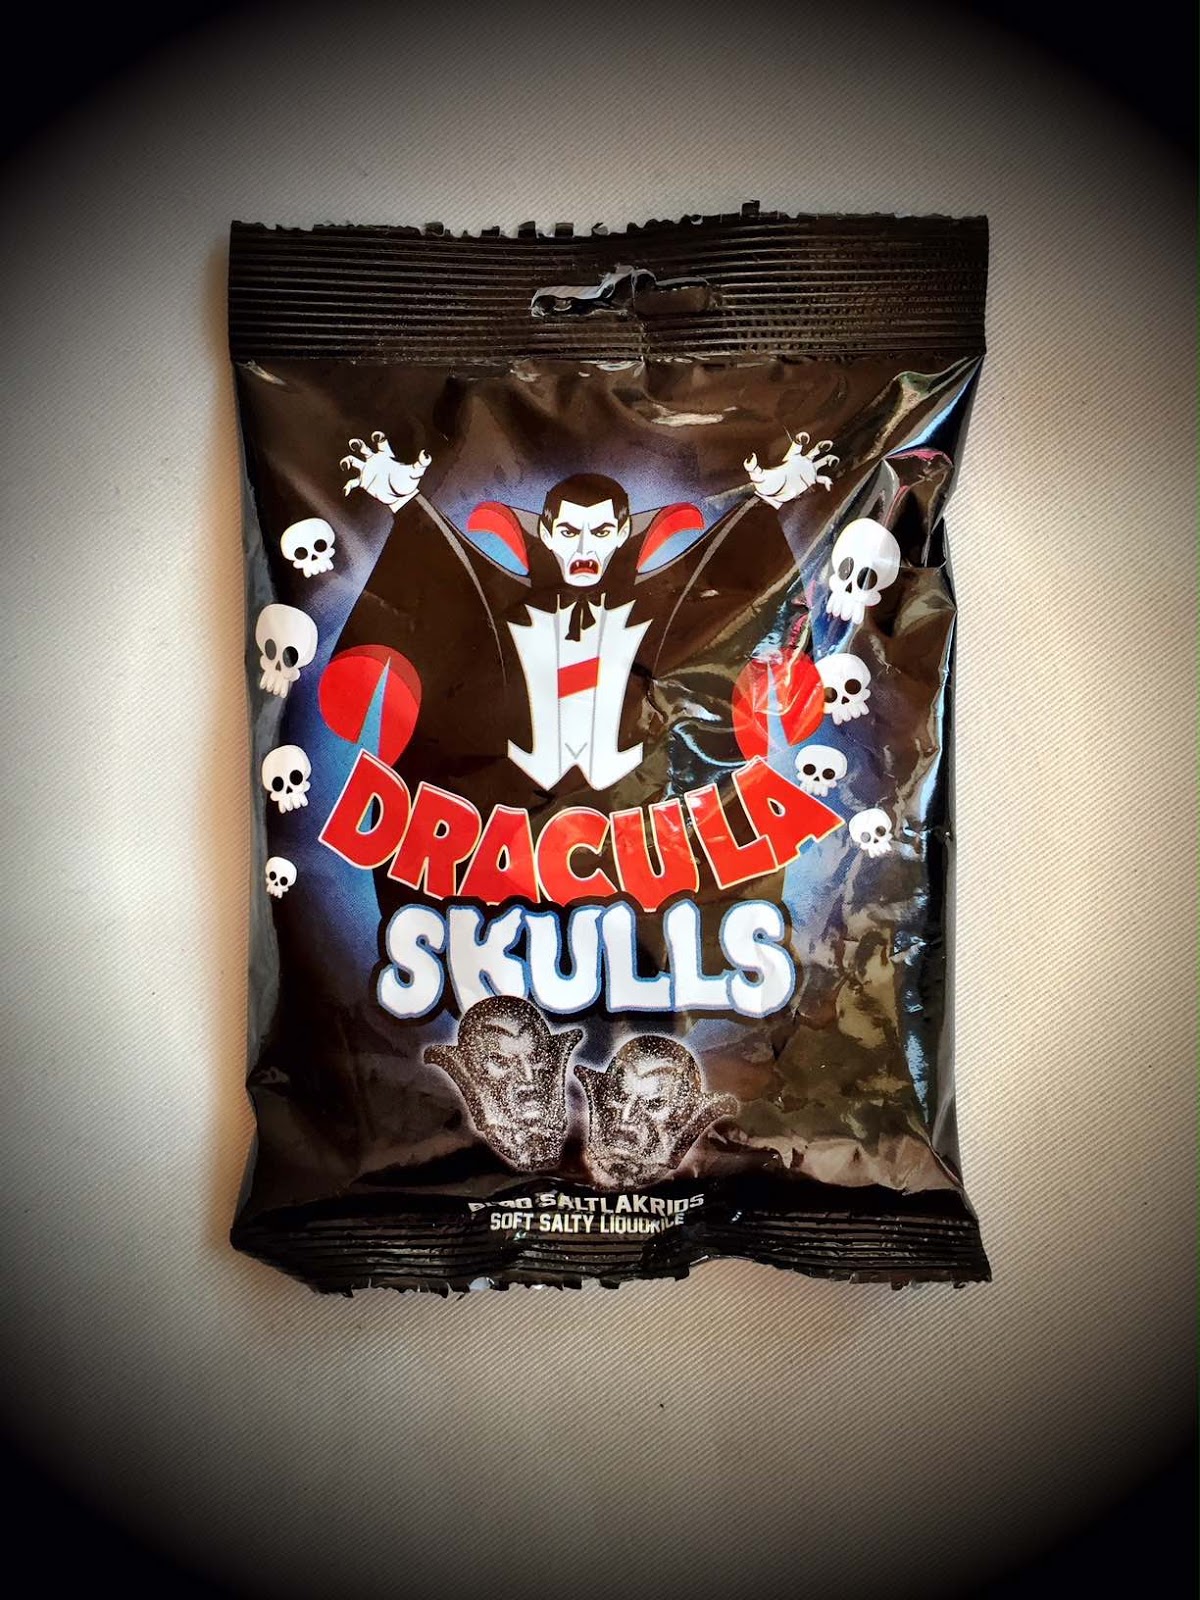 Vuggeviser snesevis uudgrundelig Skræk og Rædsel: Gyser-slik: Dracula Skulls